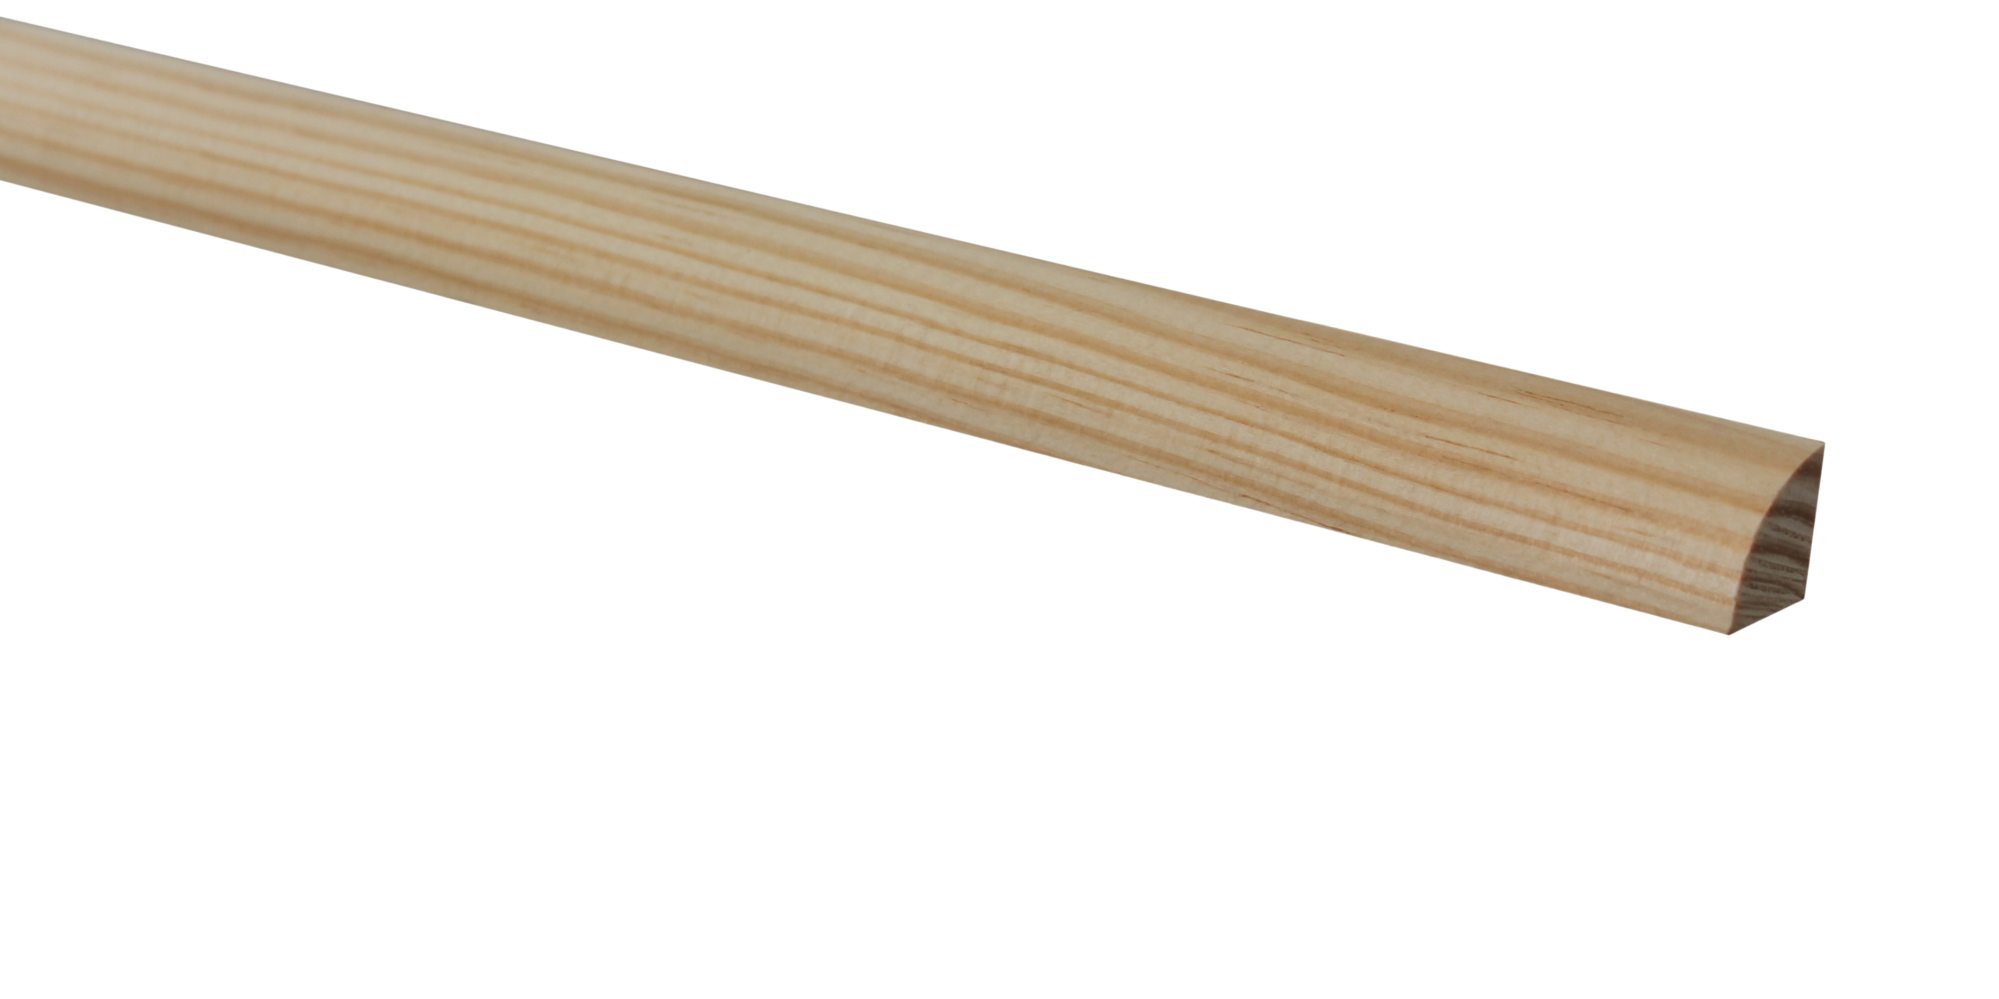 Junquillo de pino 9x9 mm x 2,40 m (ancho x grueso x largo)